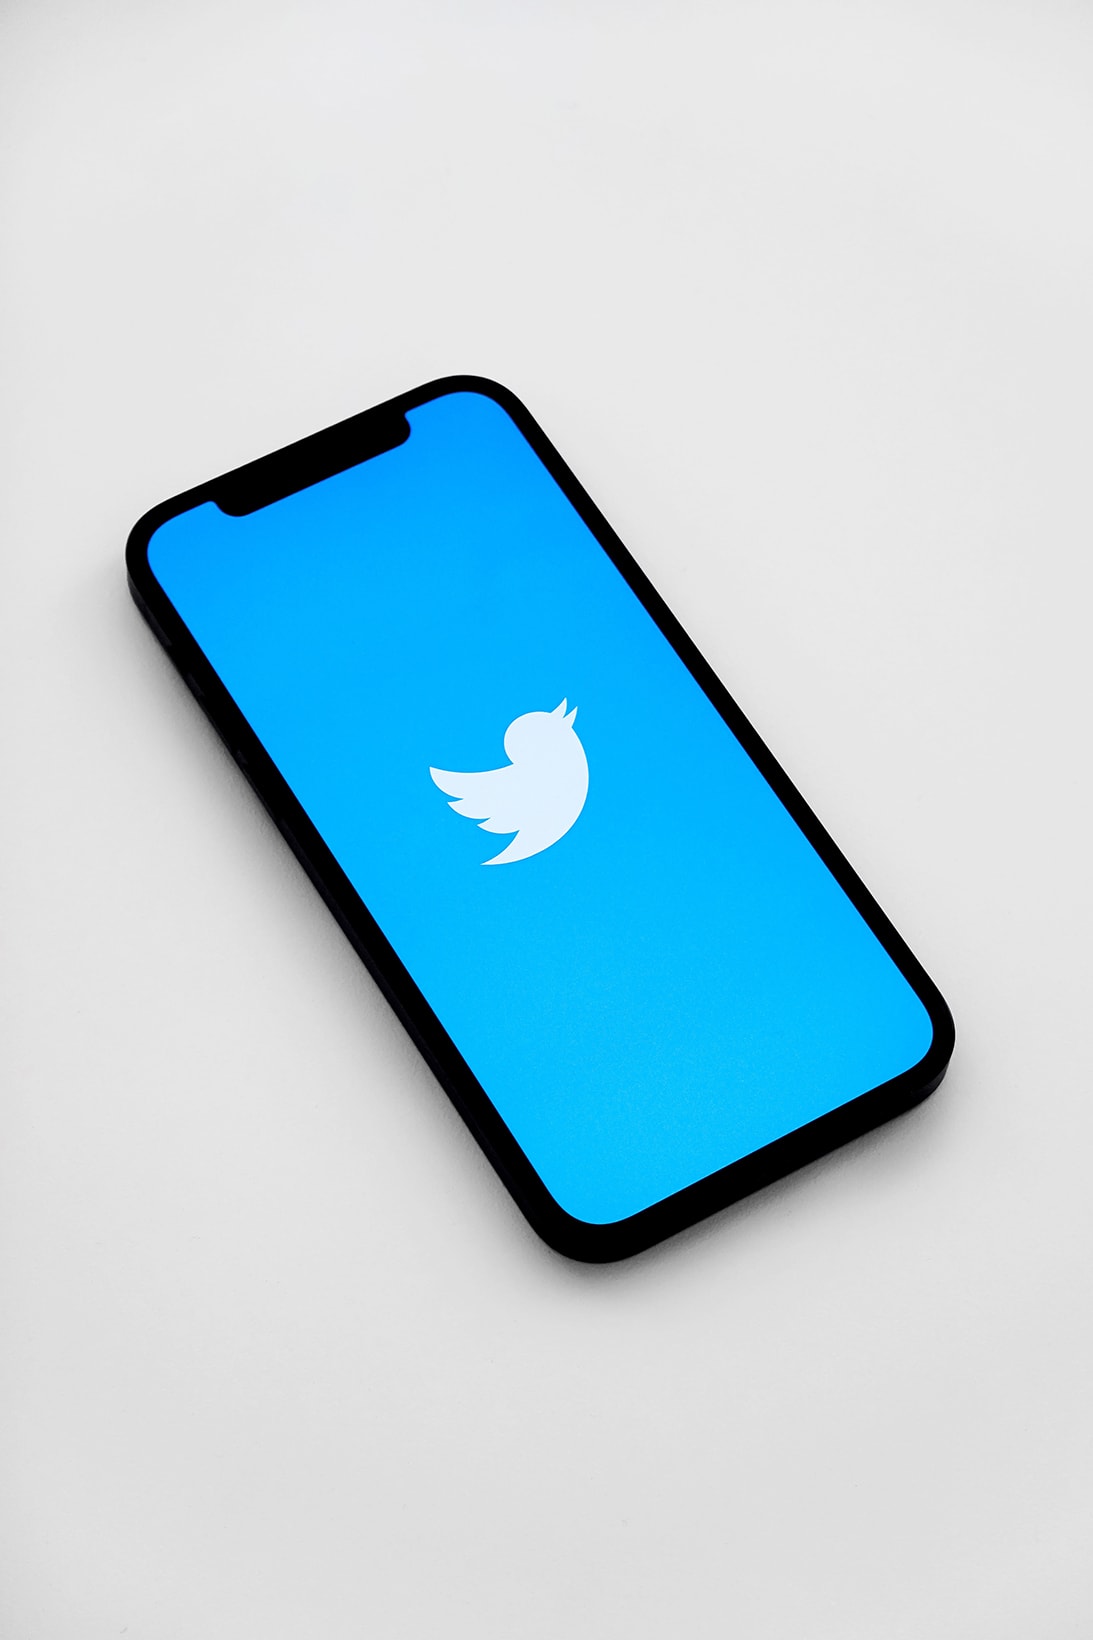 Twitter Social Media App Apple iPhone 